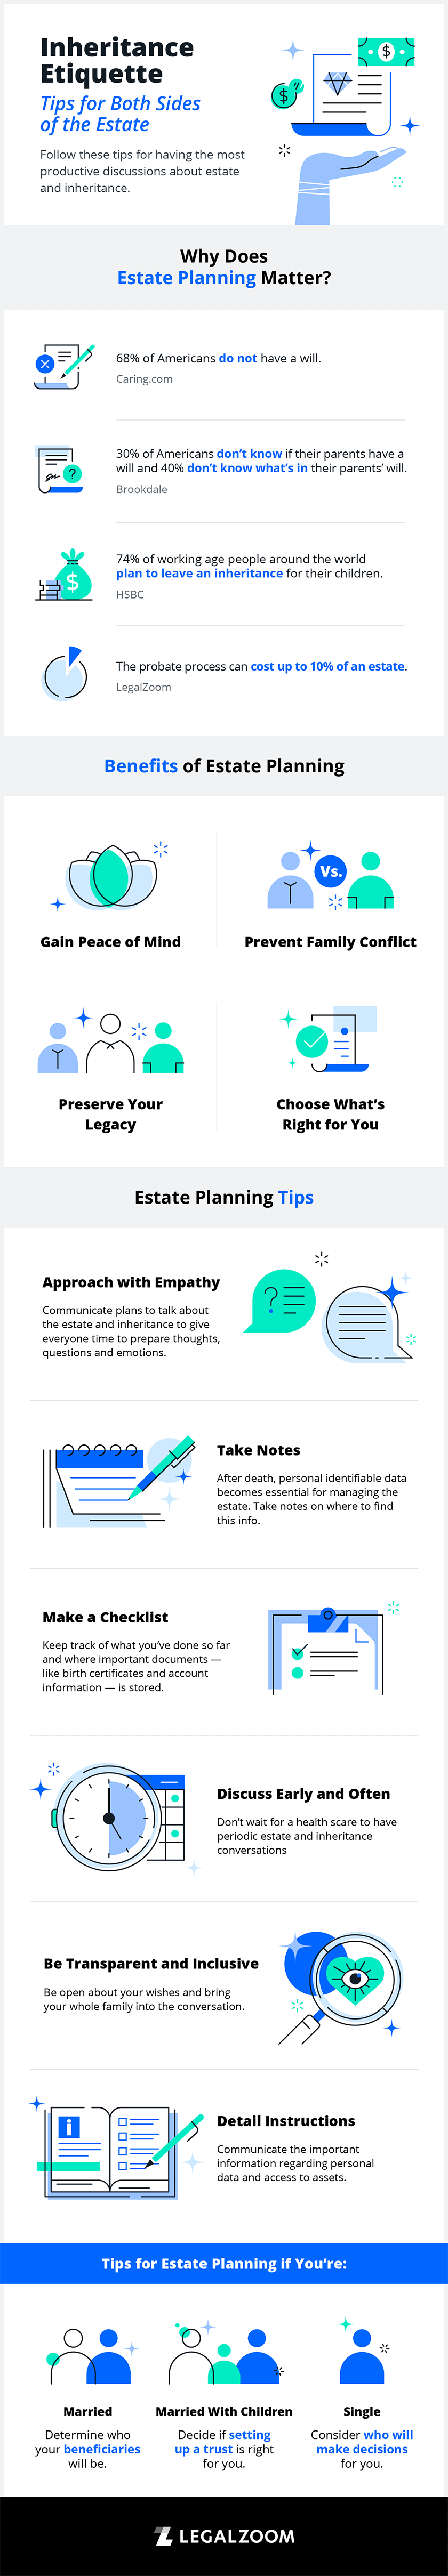 inheritance-etiquette-tips infographic 